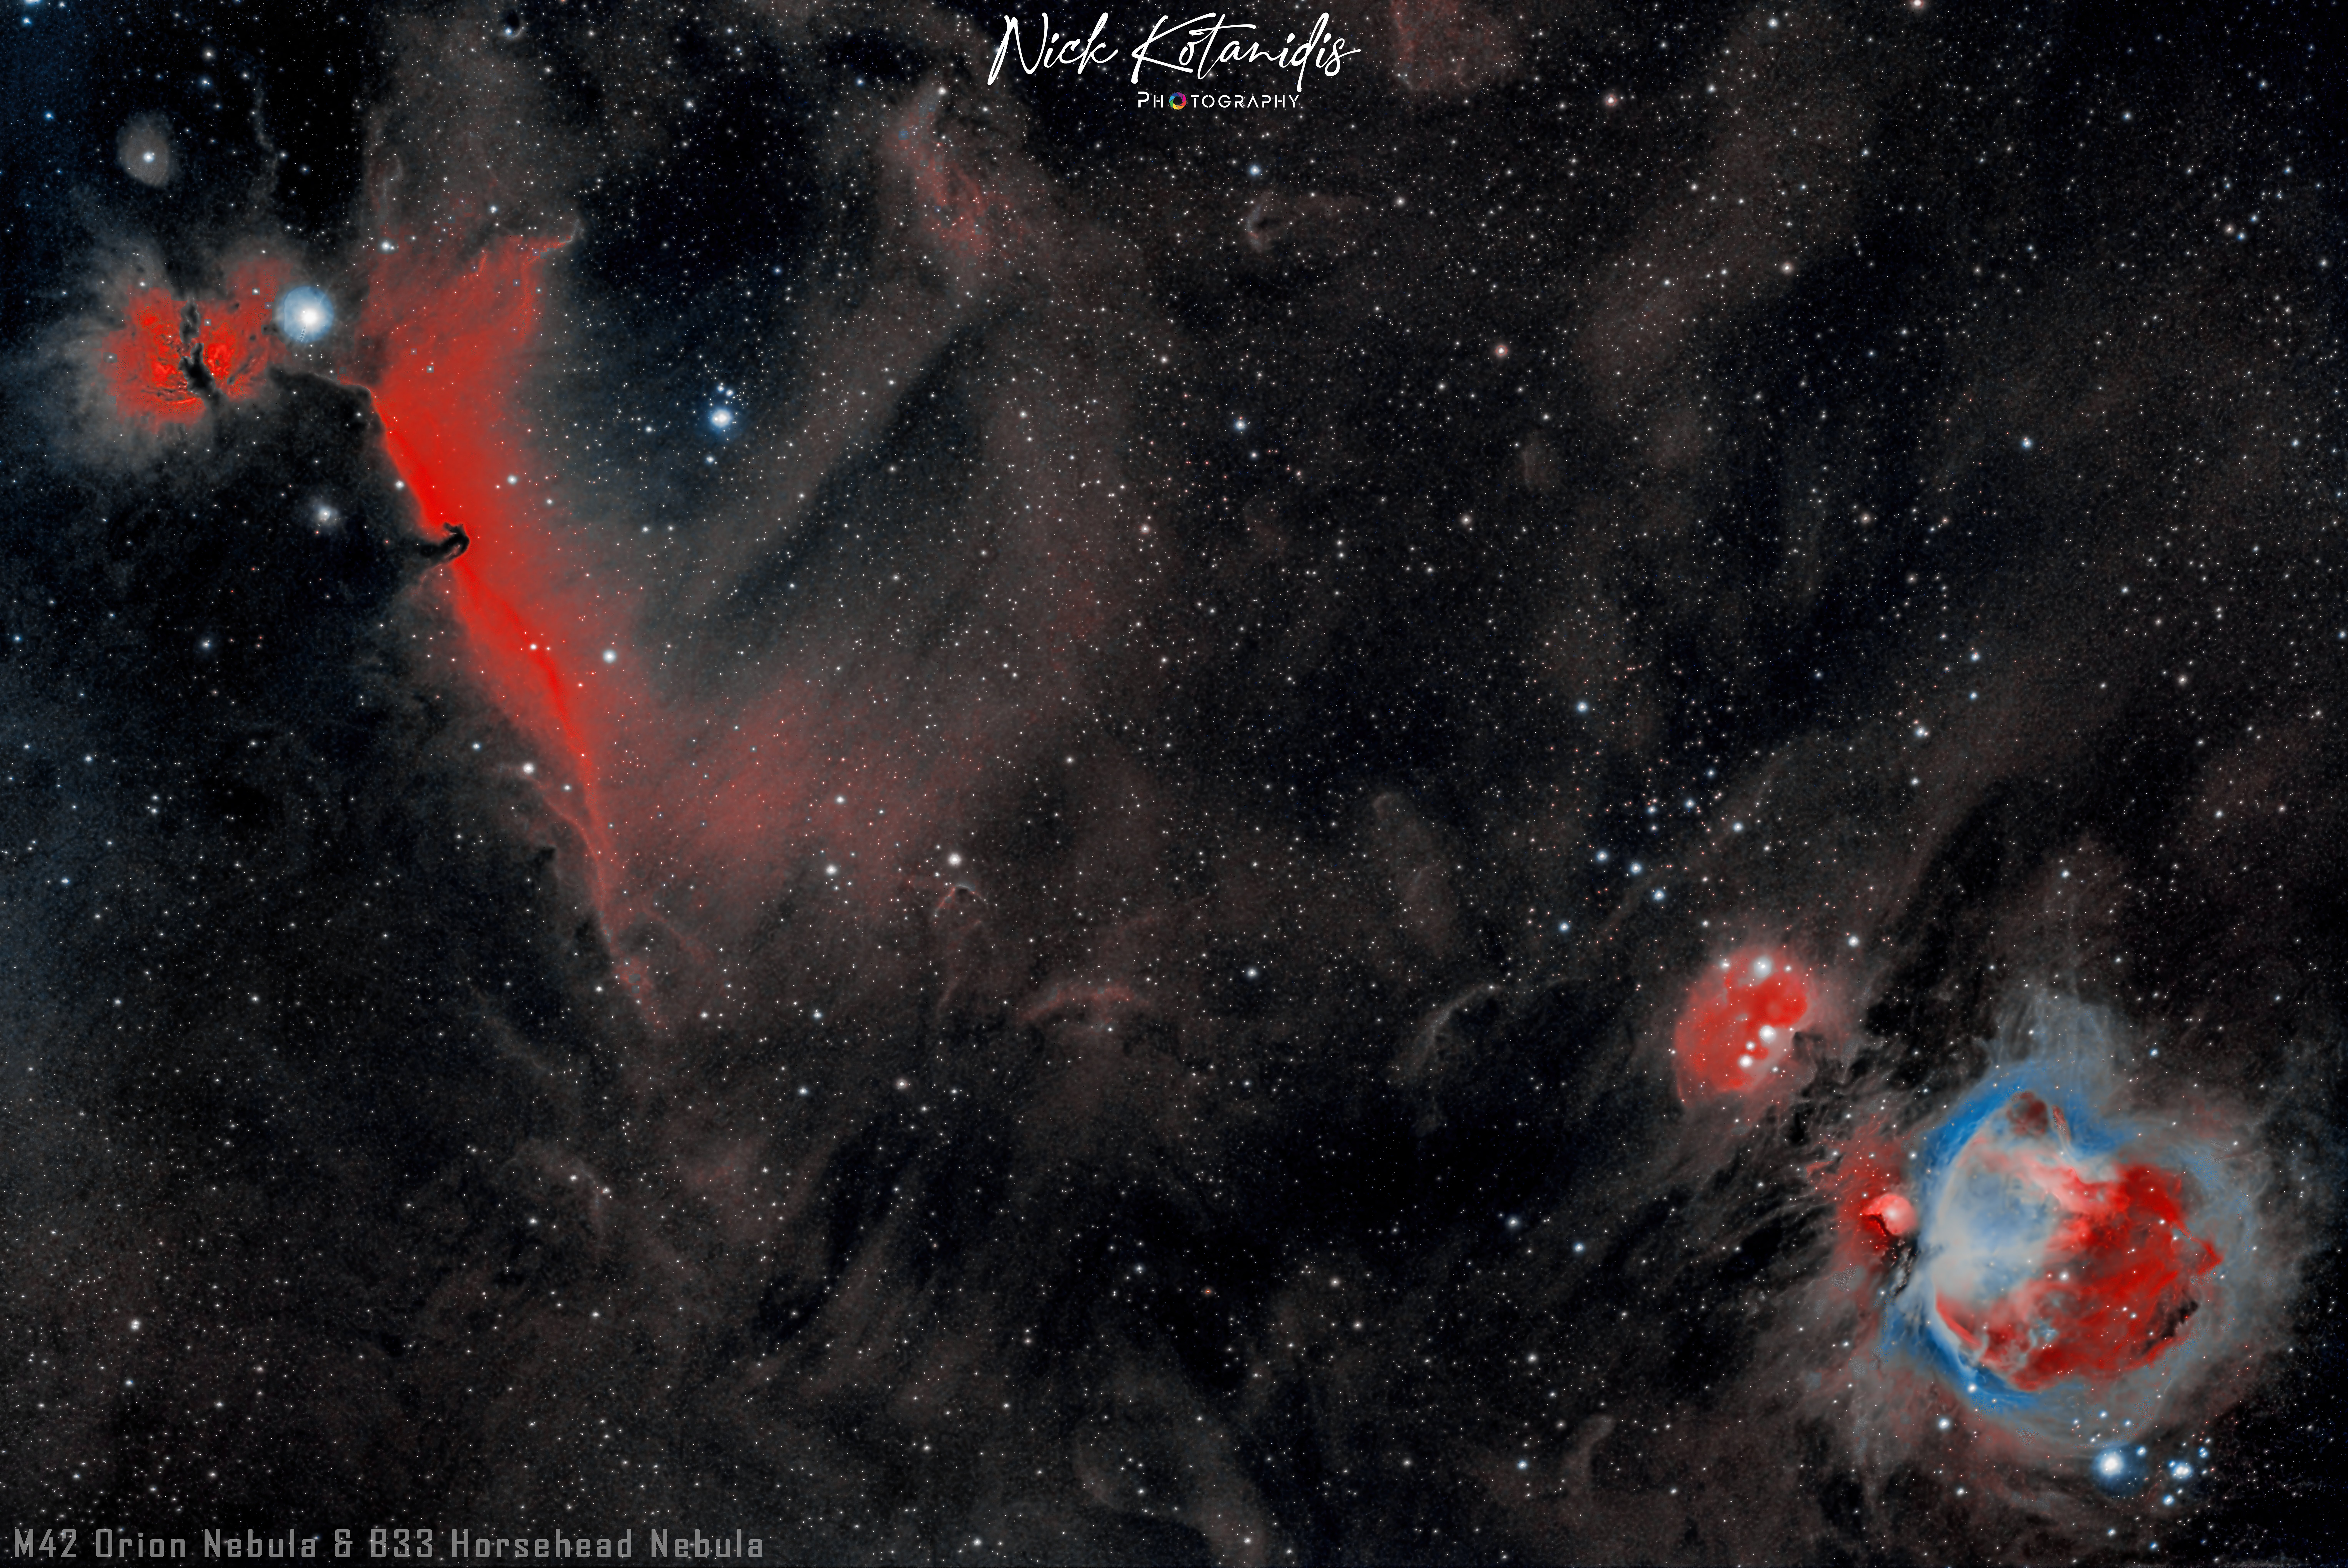 The Orion Nebula (M42) and the Horsehead Nebula (B33) in (SHO)